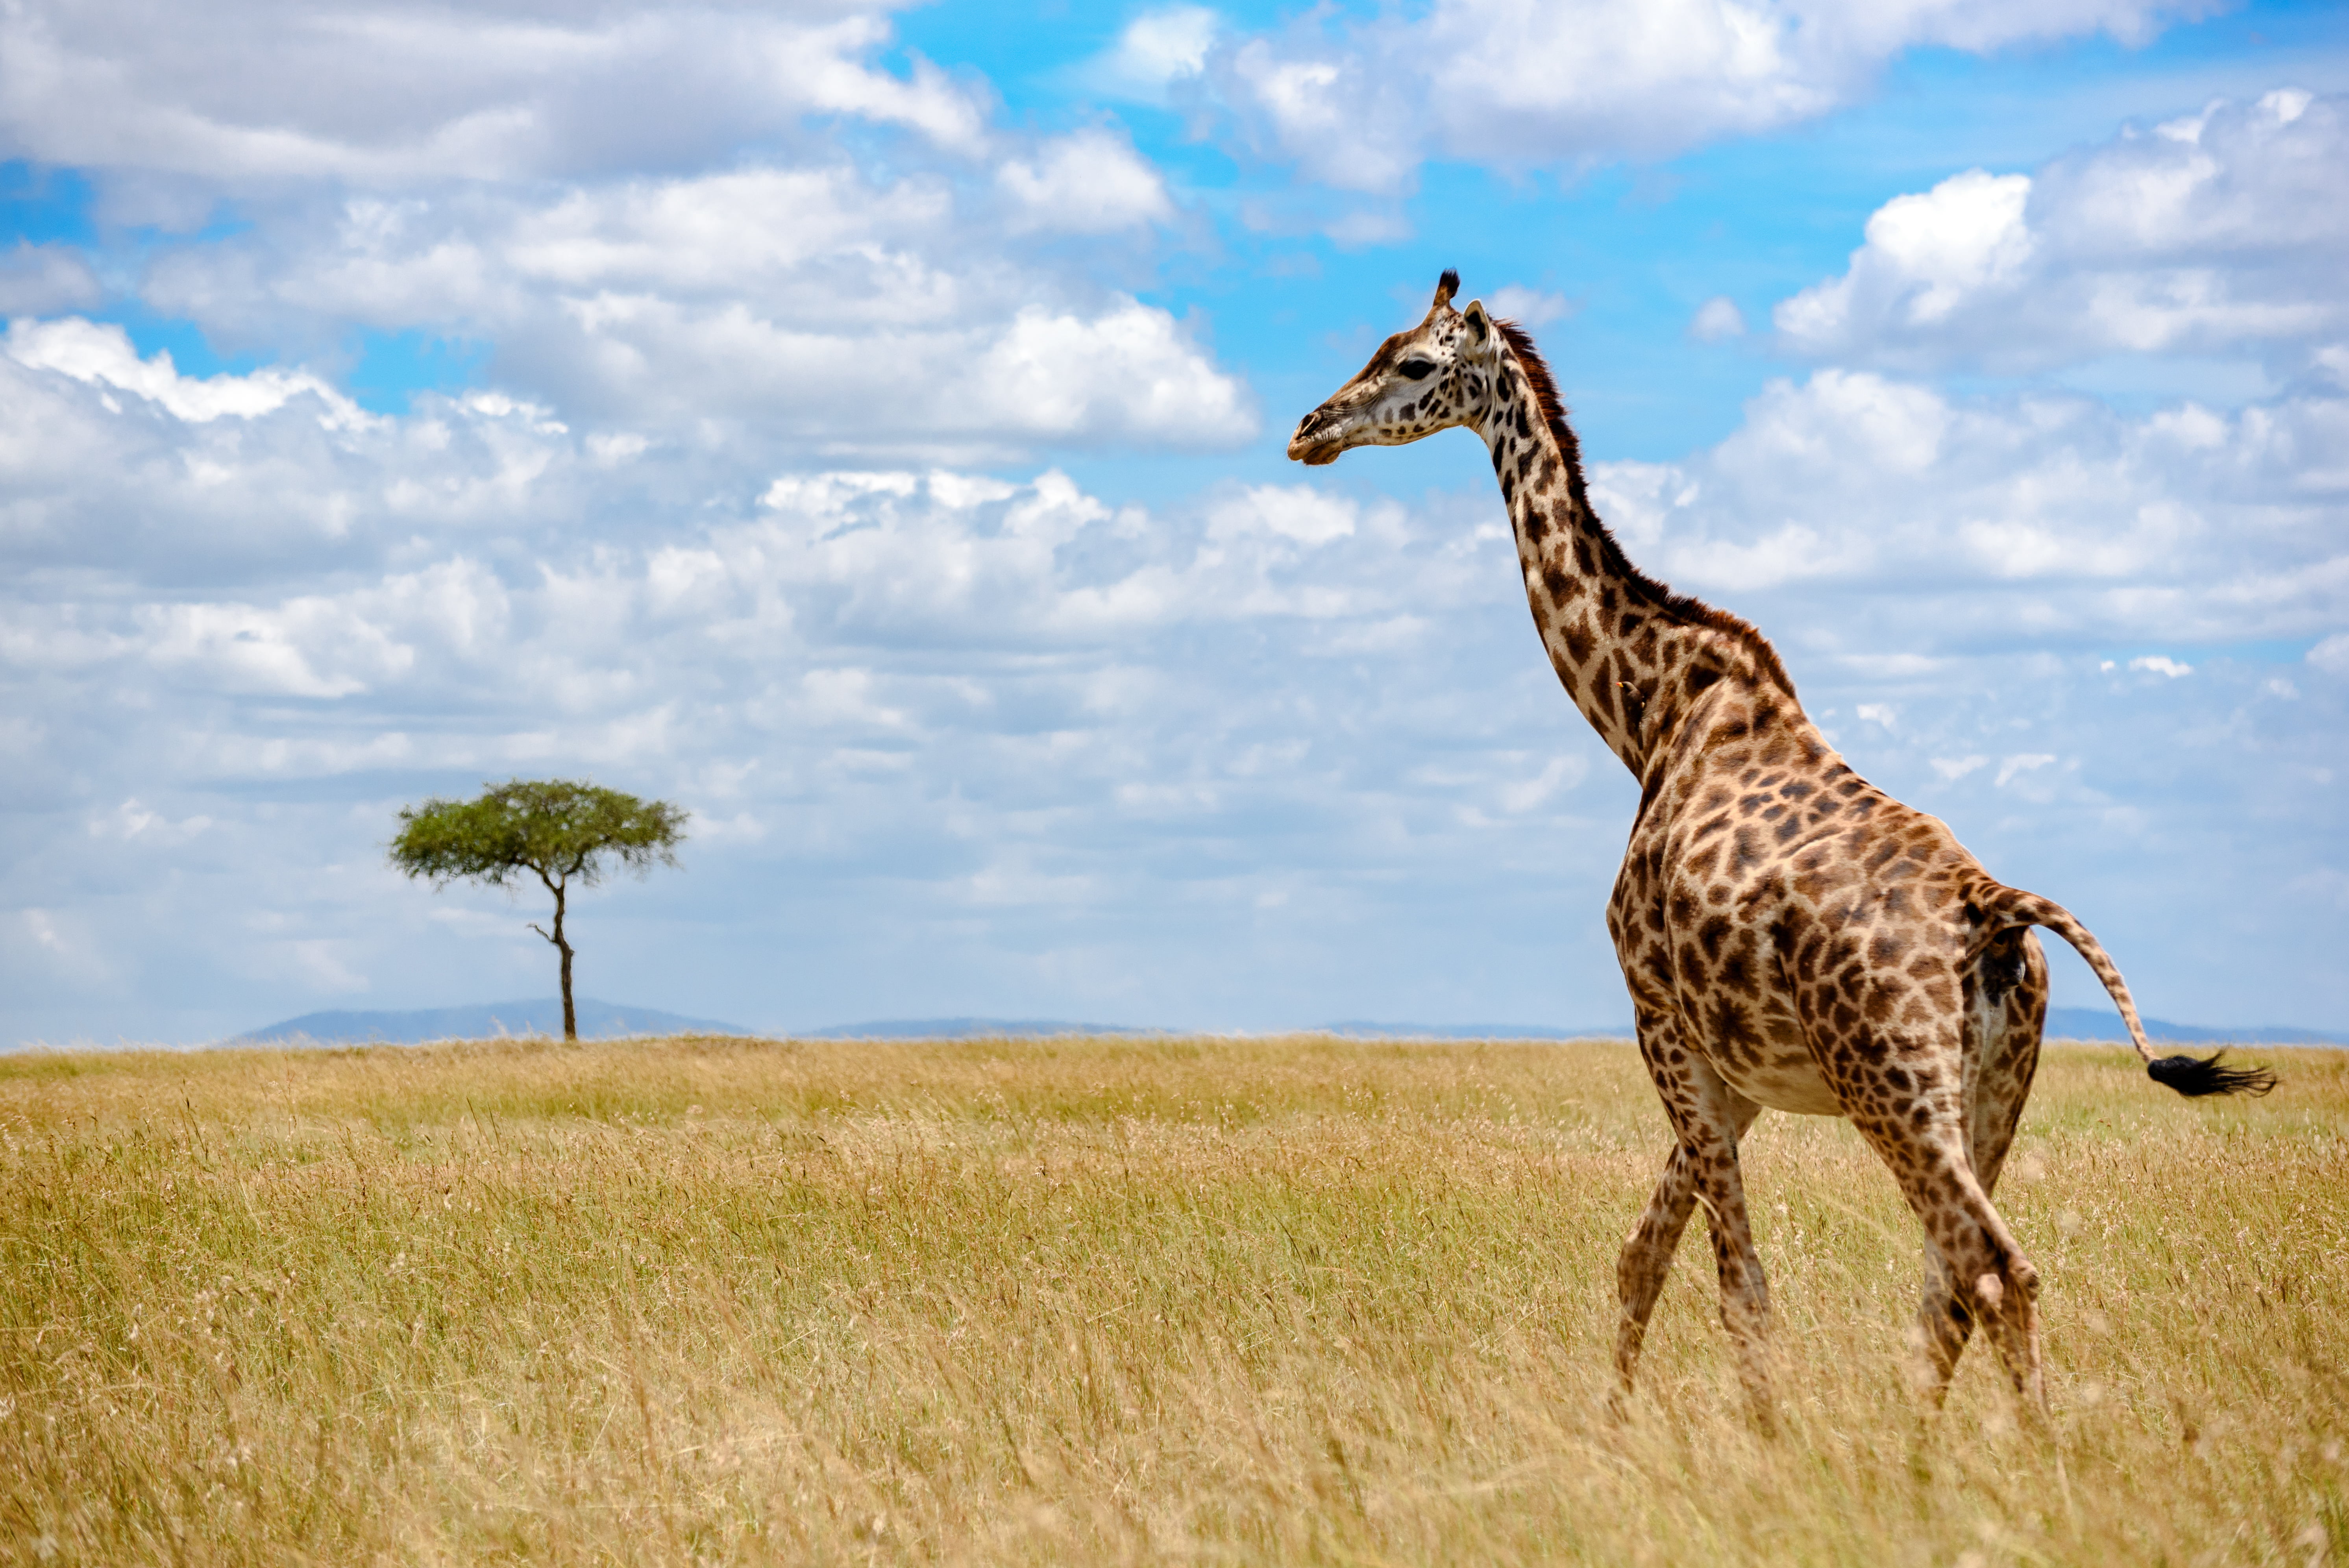 Giraffe on savannah under white and blue sky at daytime, grass